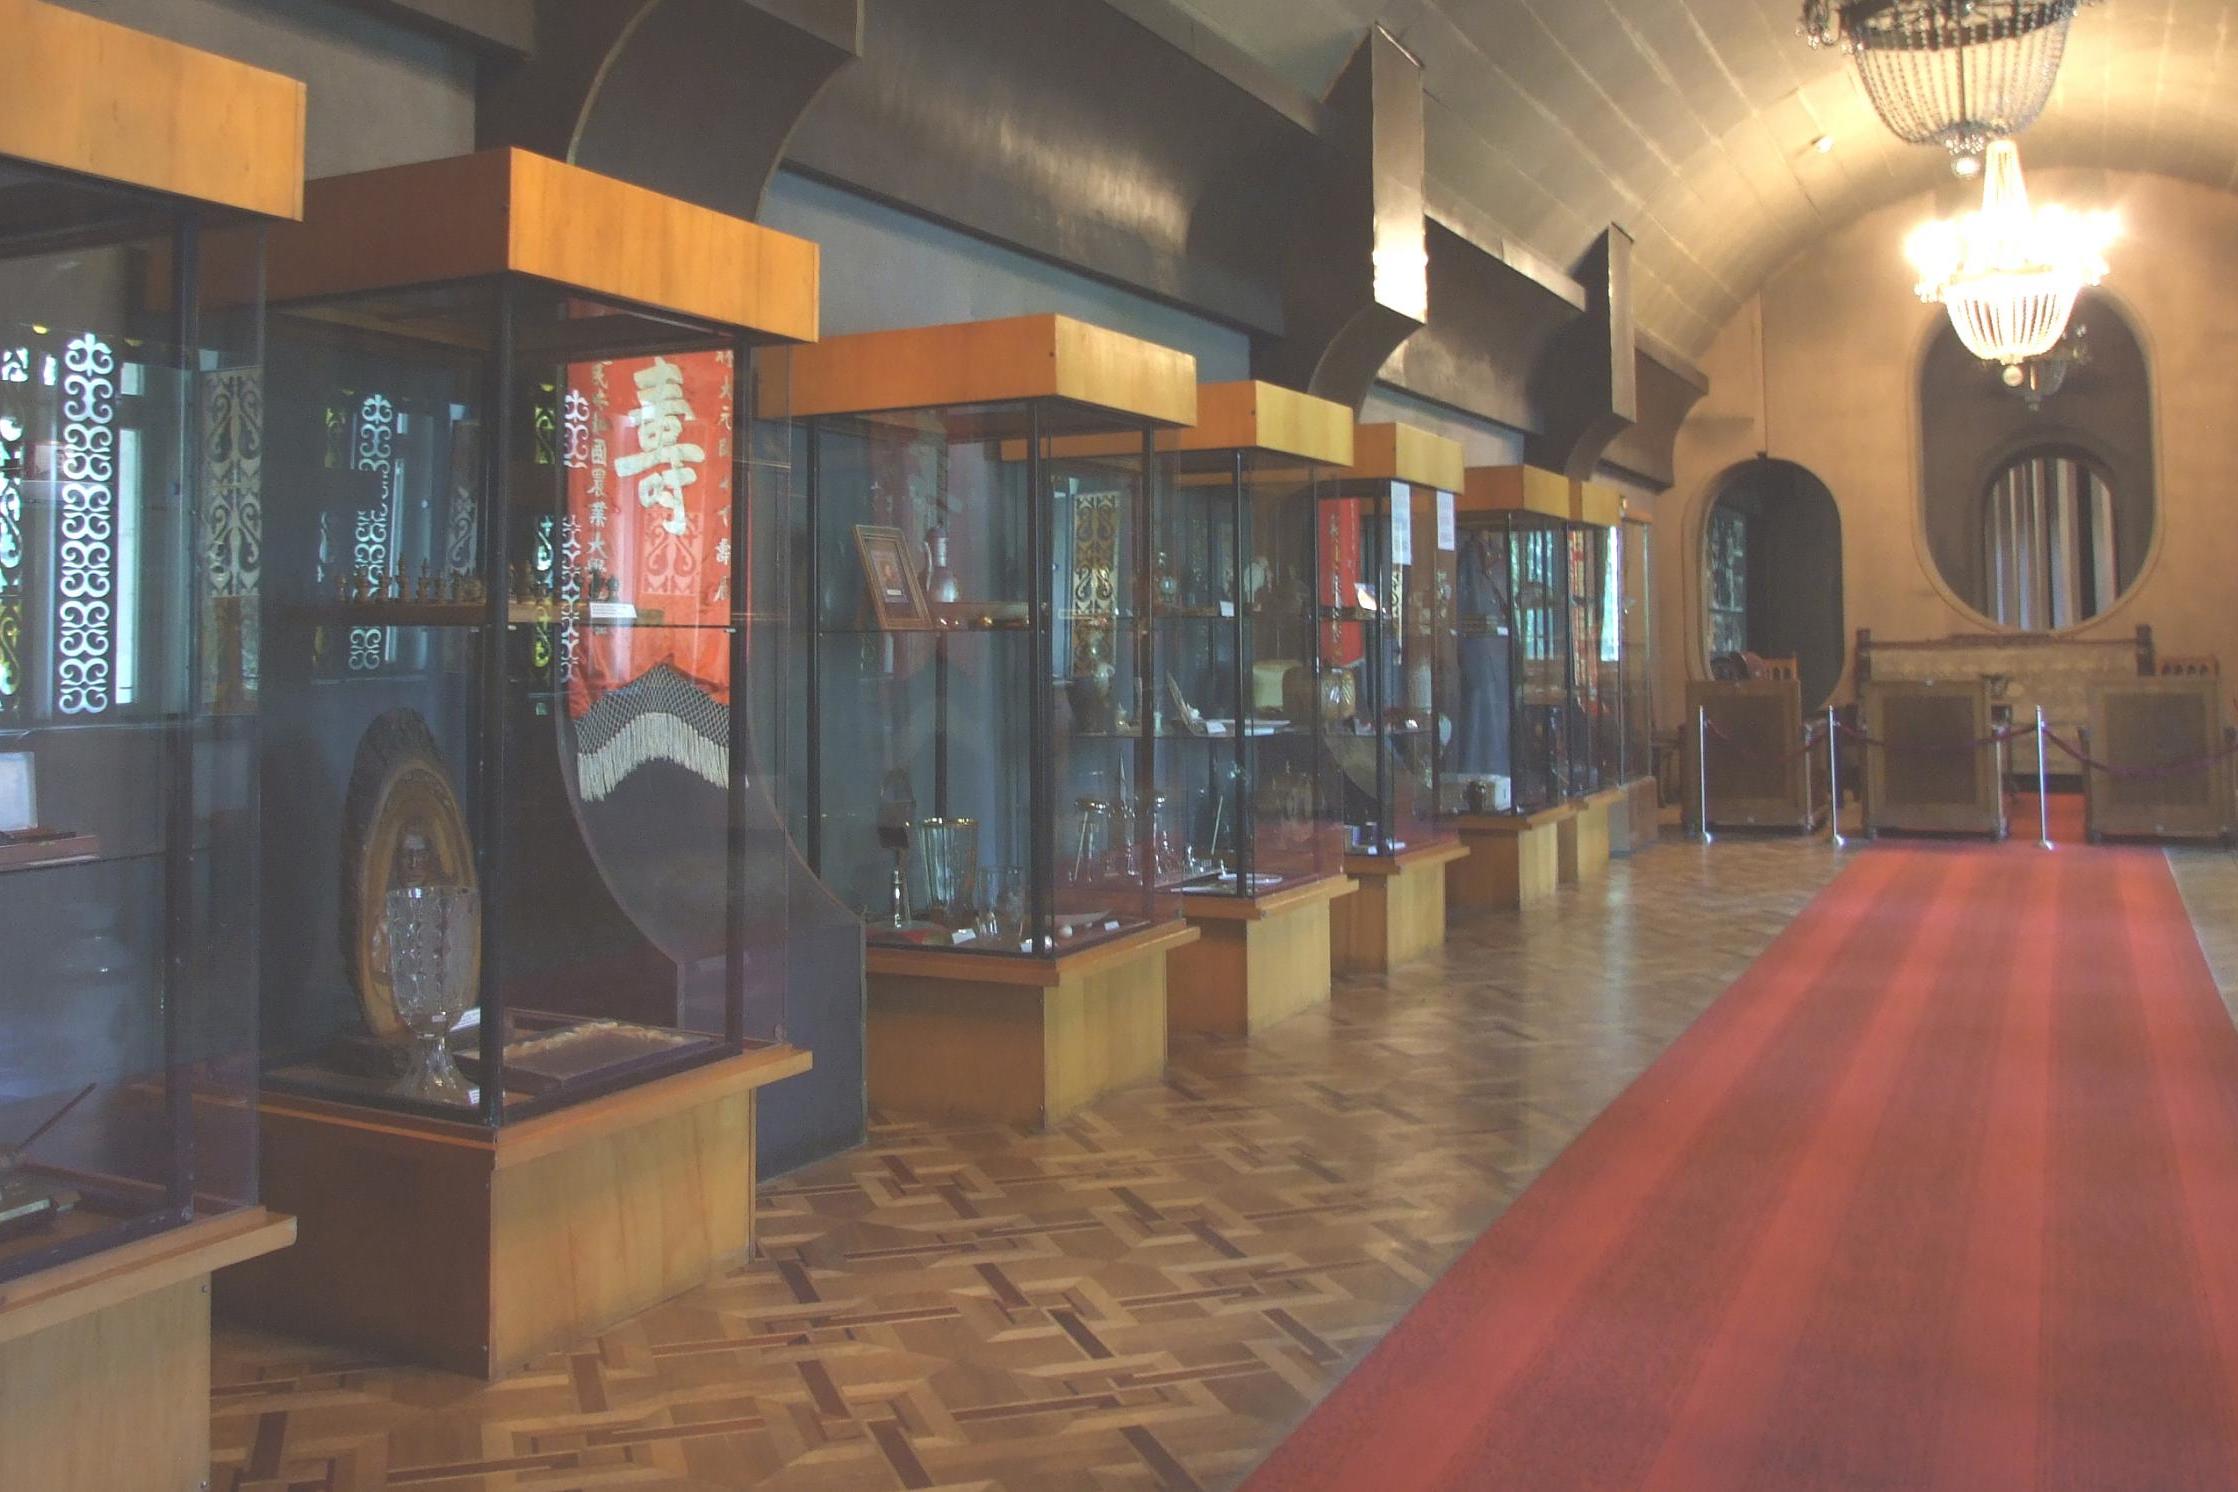 The Stalin Museum has a series of rooms containing encased memorabilia